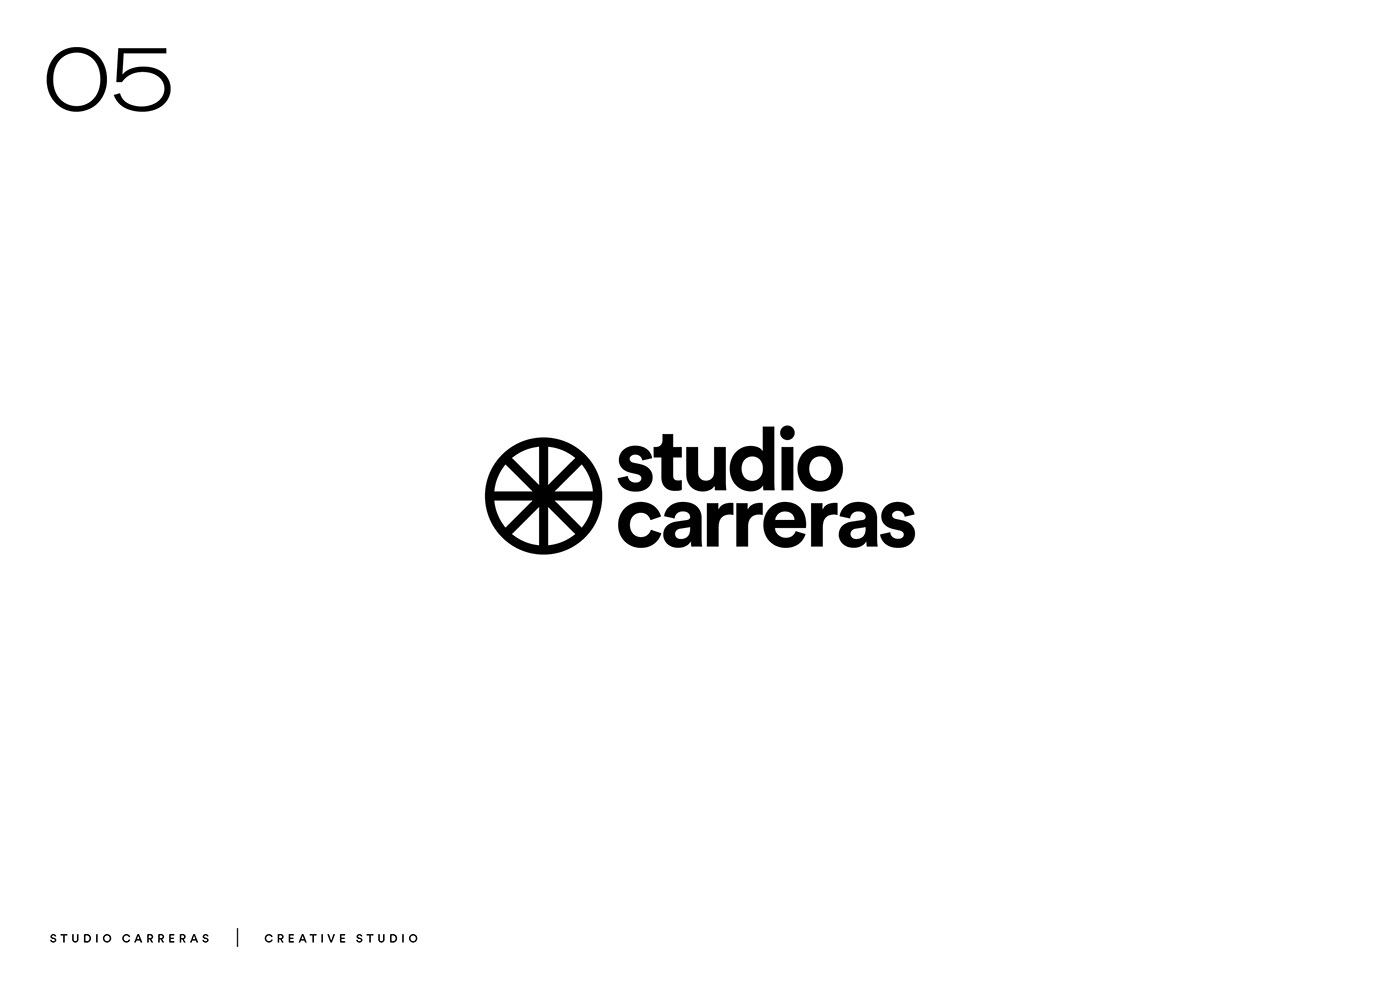 Studio Carreras设计工作室logo设计作品集